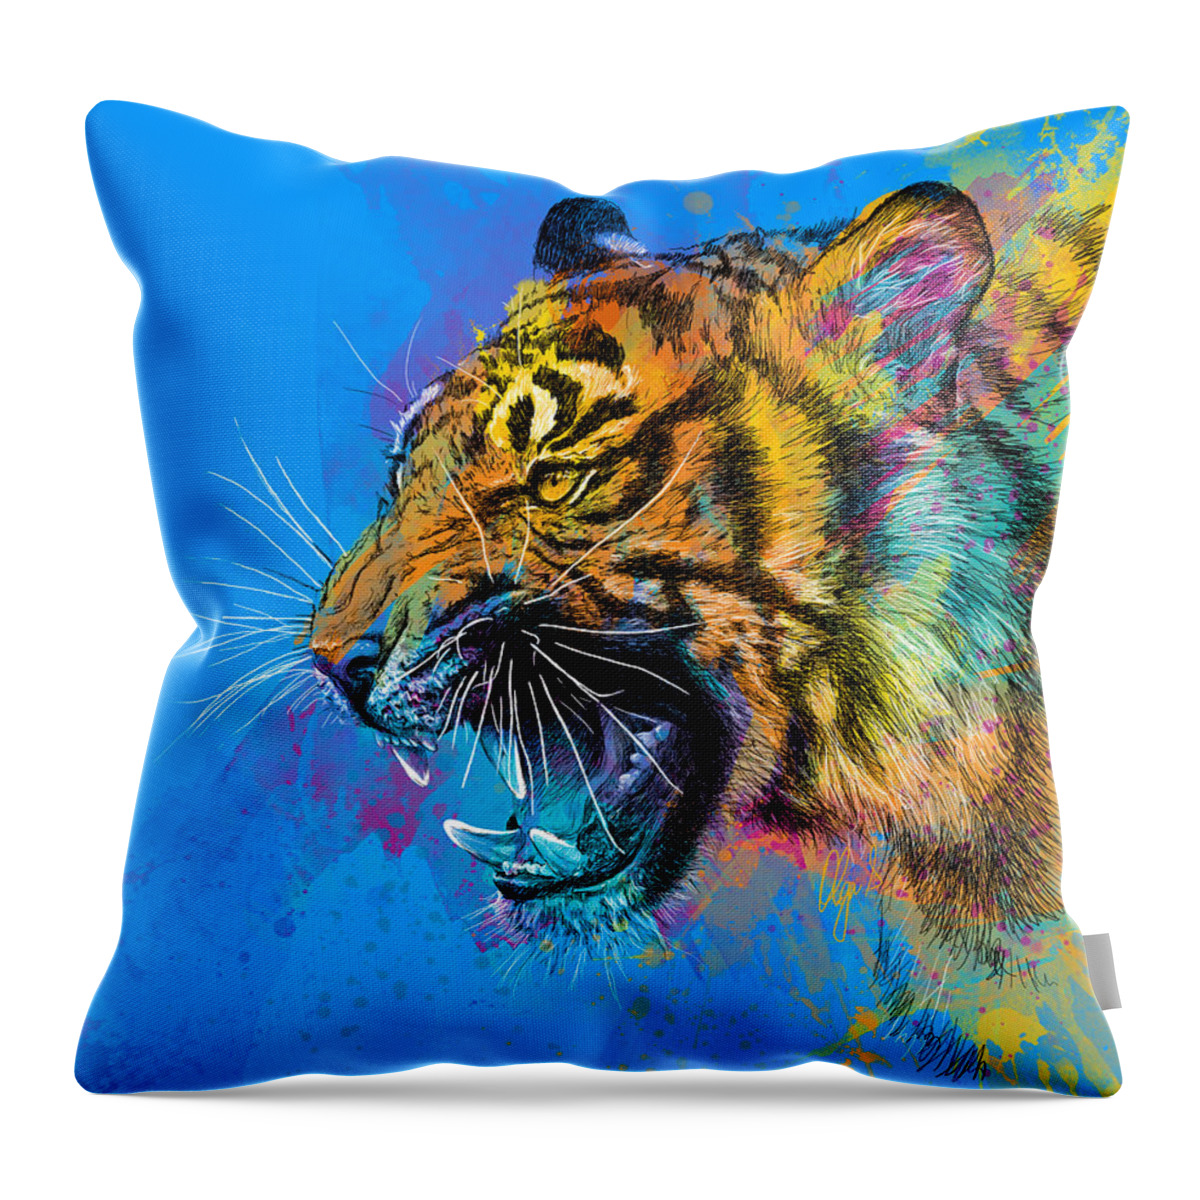 Tiger Throw Pillow featuring the digital art Crazy Tiger by Olga Shvartsur